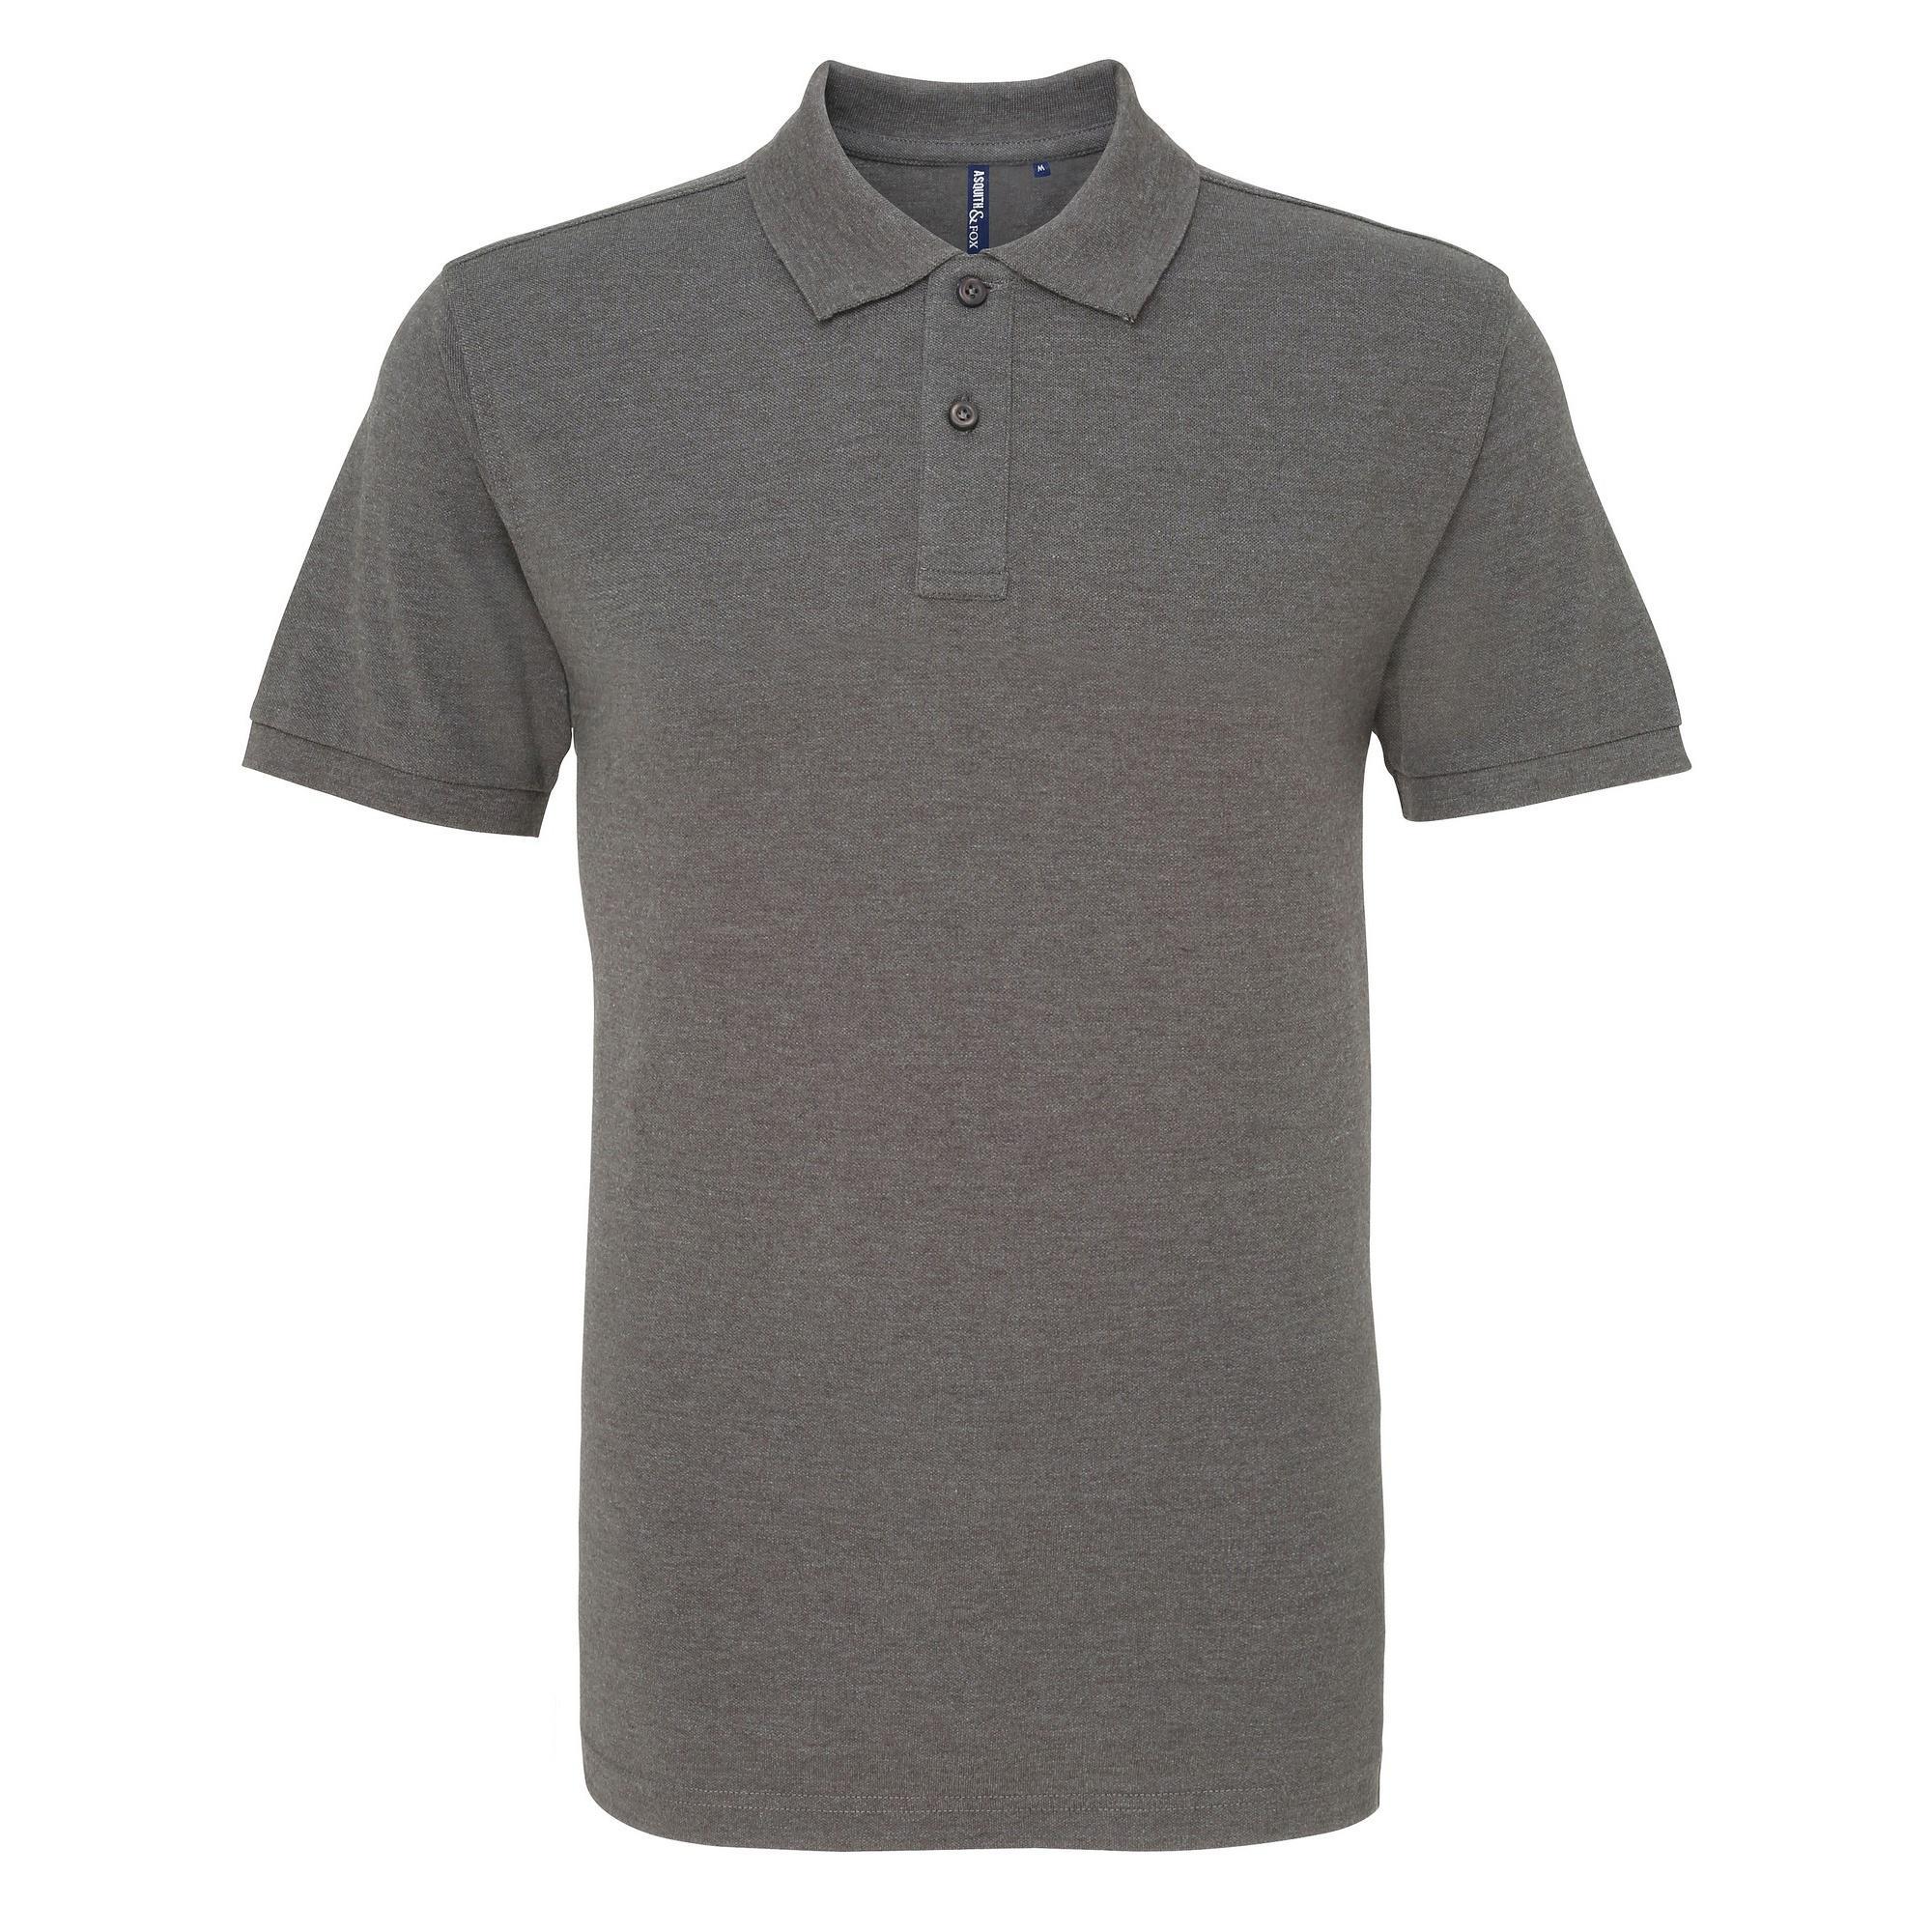 Asquith & Fox Mens Plain Short Sleeve Polo Shirt (Charcoal) (S)